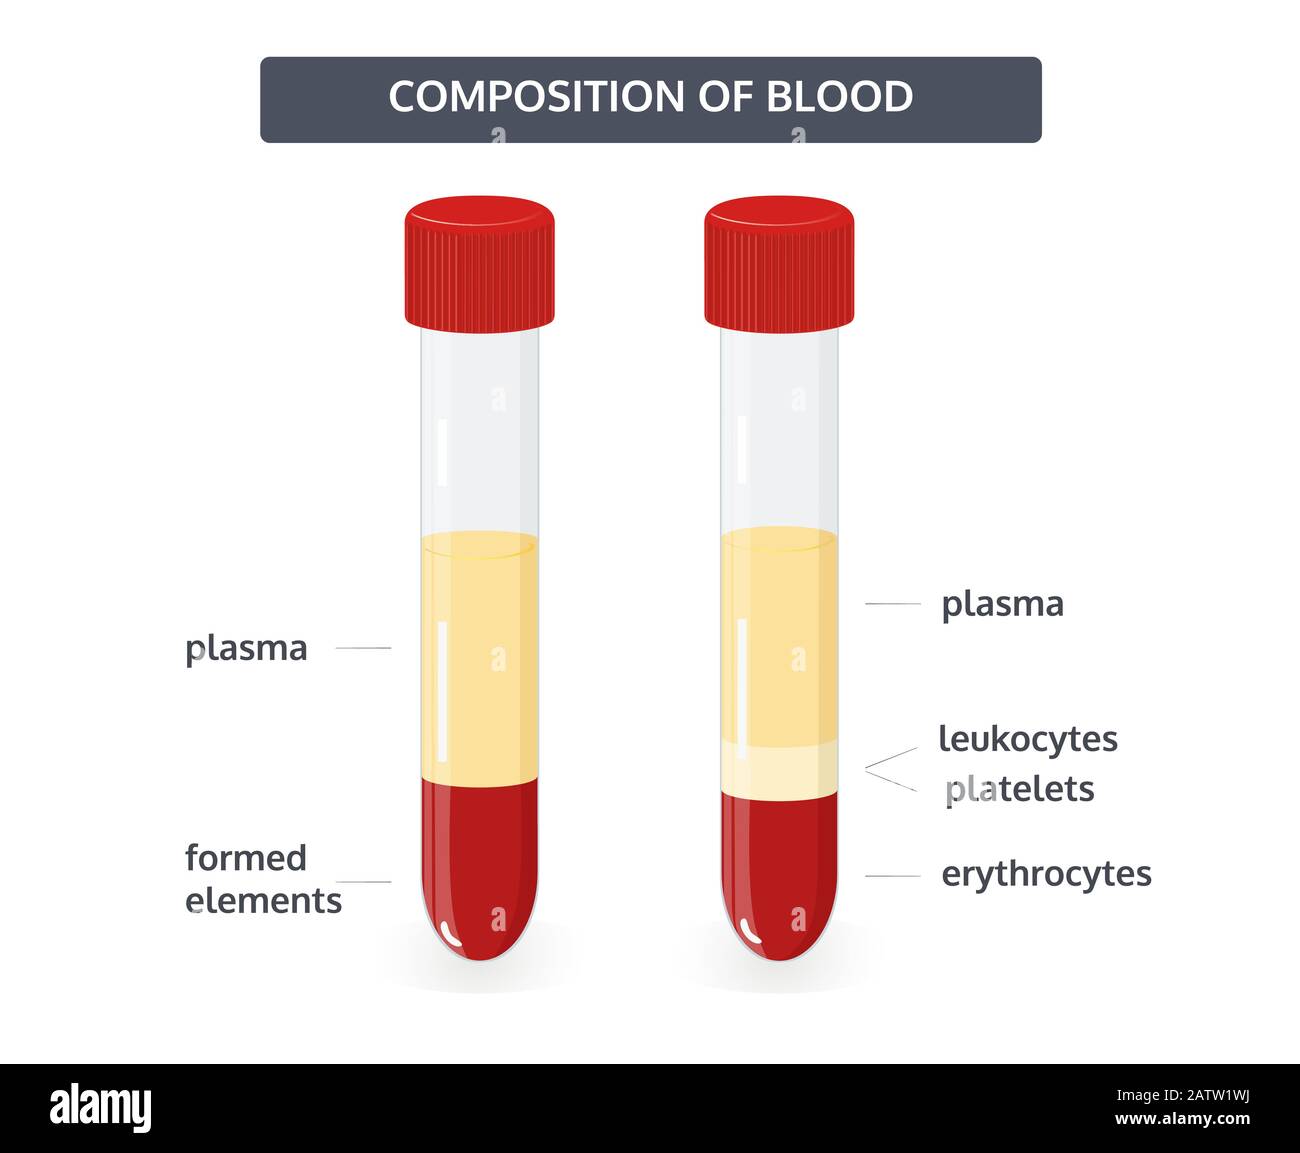 Сыворотка крови положительная. Сыворотка крови в пробирке. Плазма крови в пробирке. Пробирки с кровью. Красная сыворотка крови.